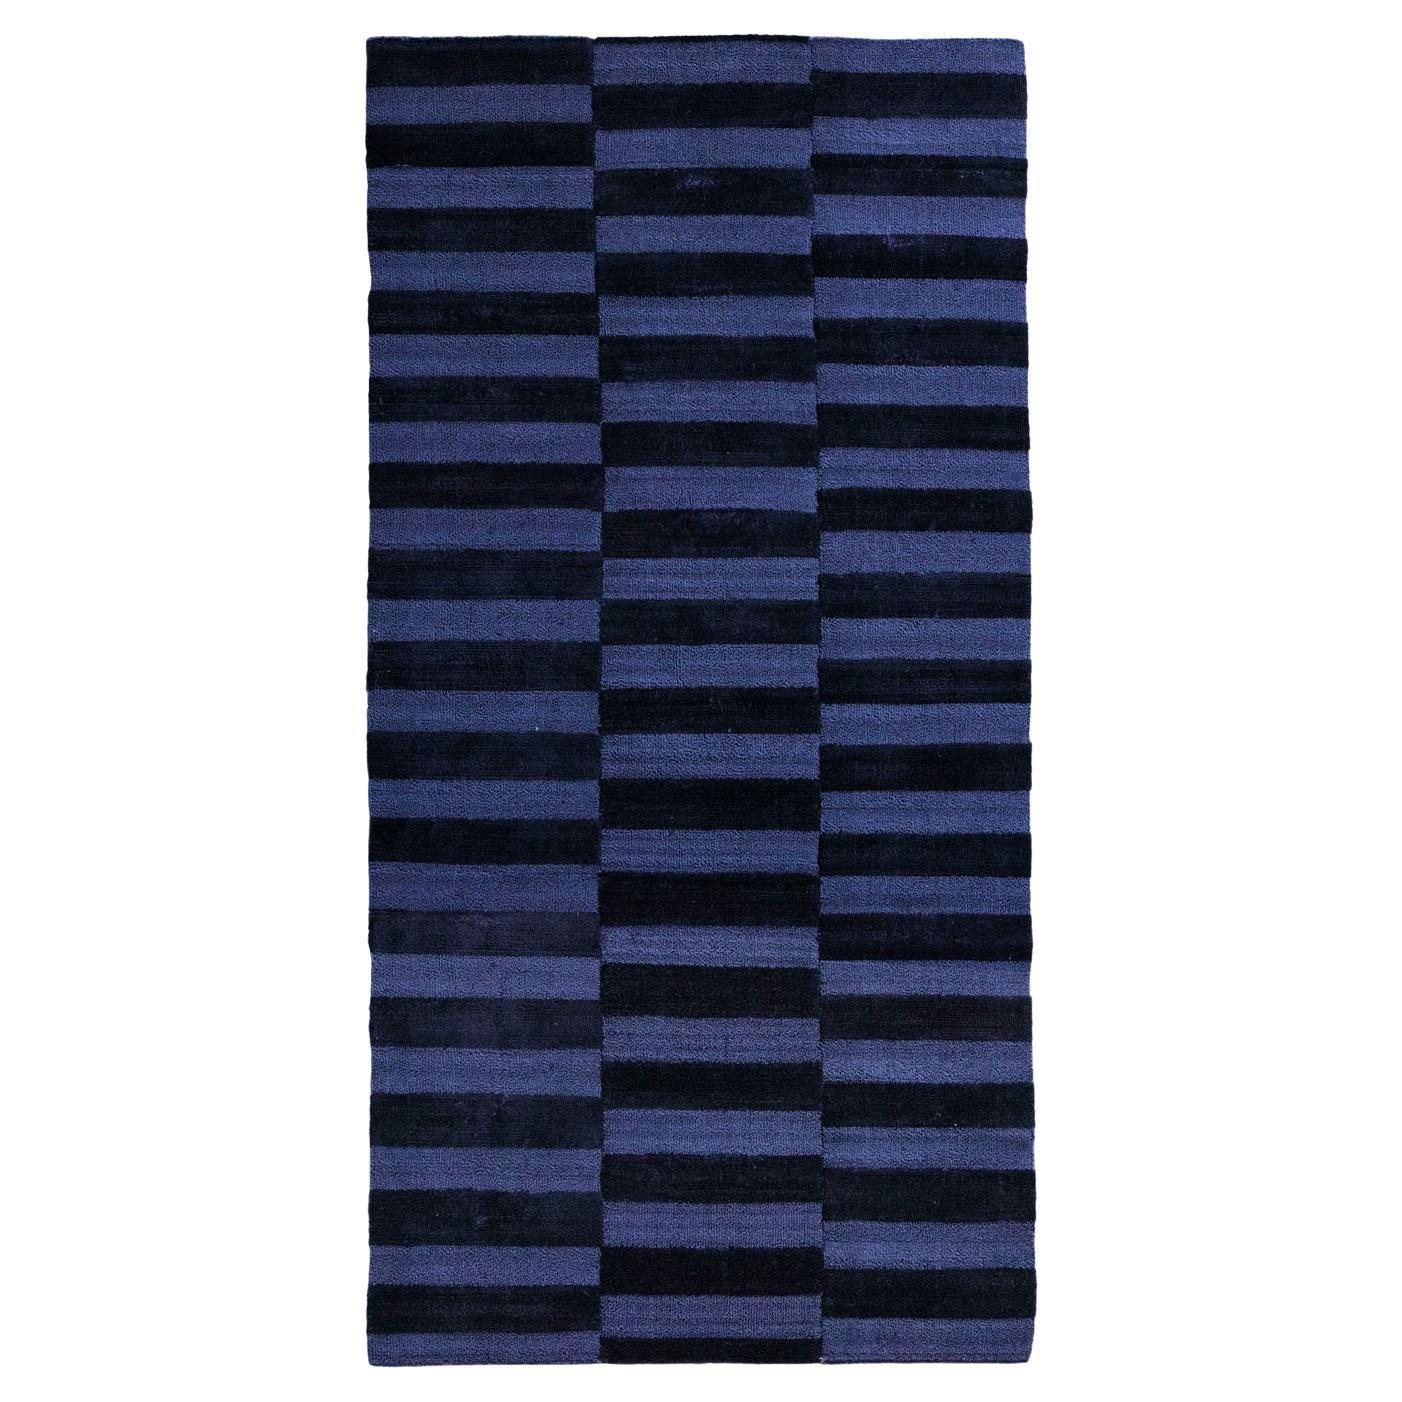 Contemporary Striped Luxury Shiny Velvety Blue Rug by Deanna Comellini 150x300cm